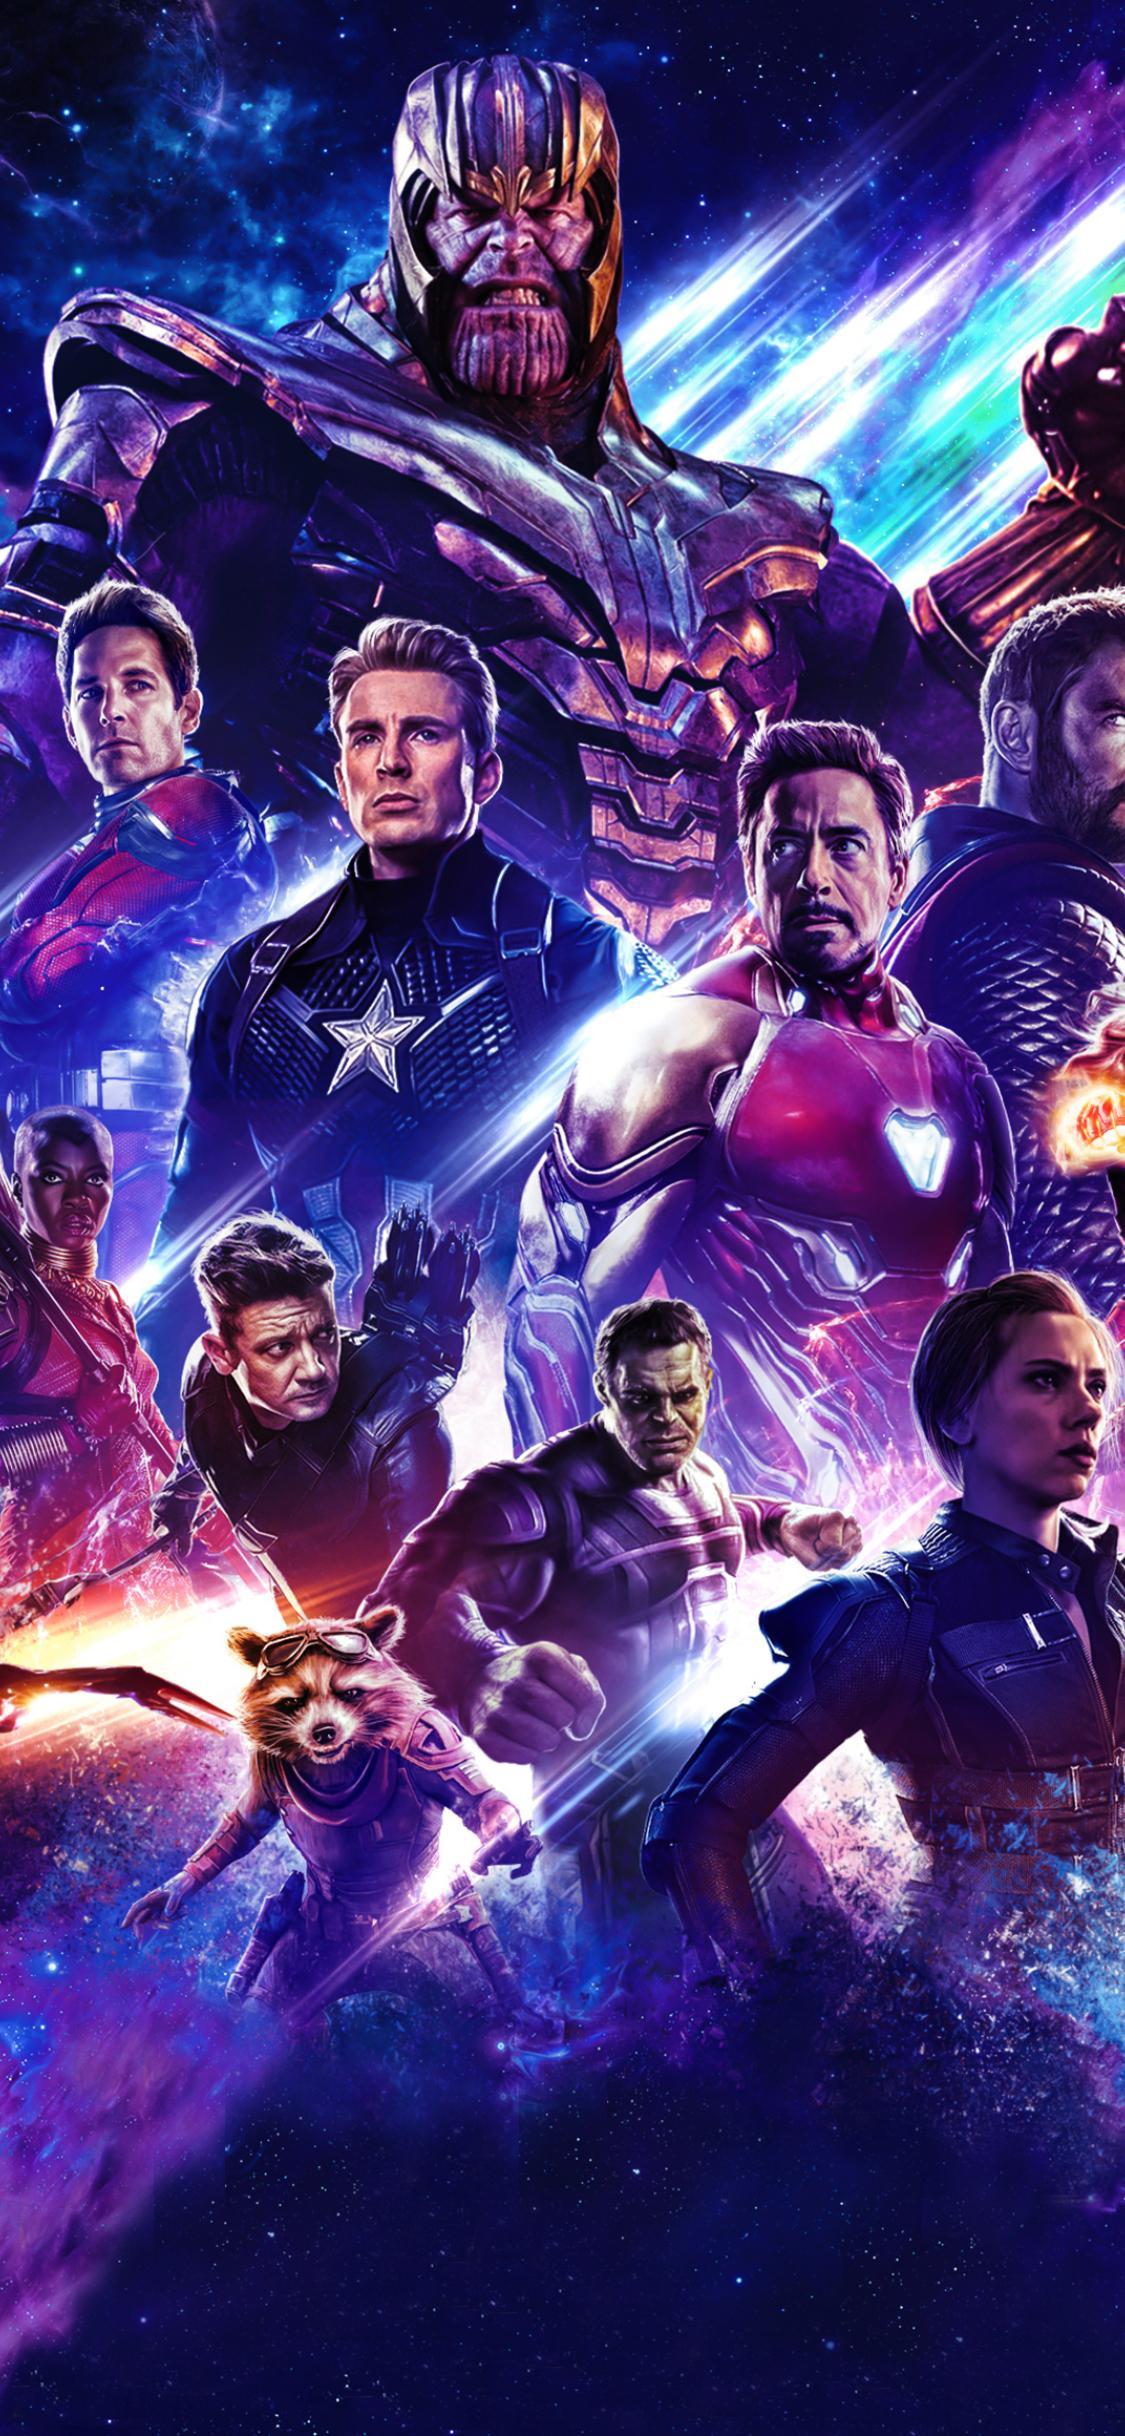 Avengers Endgame 2019 Movie iPhone XS, iPhone 10